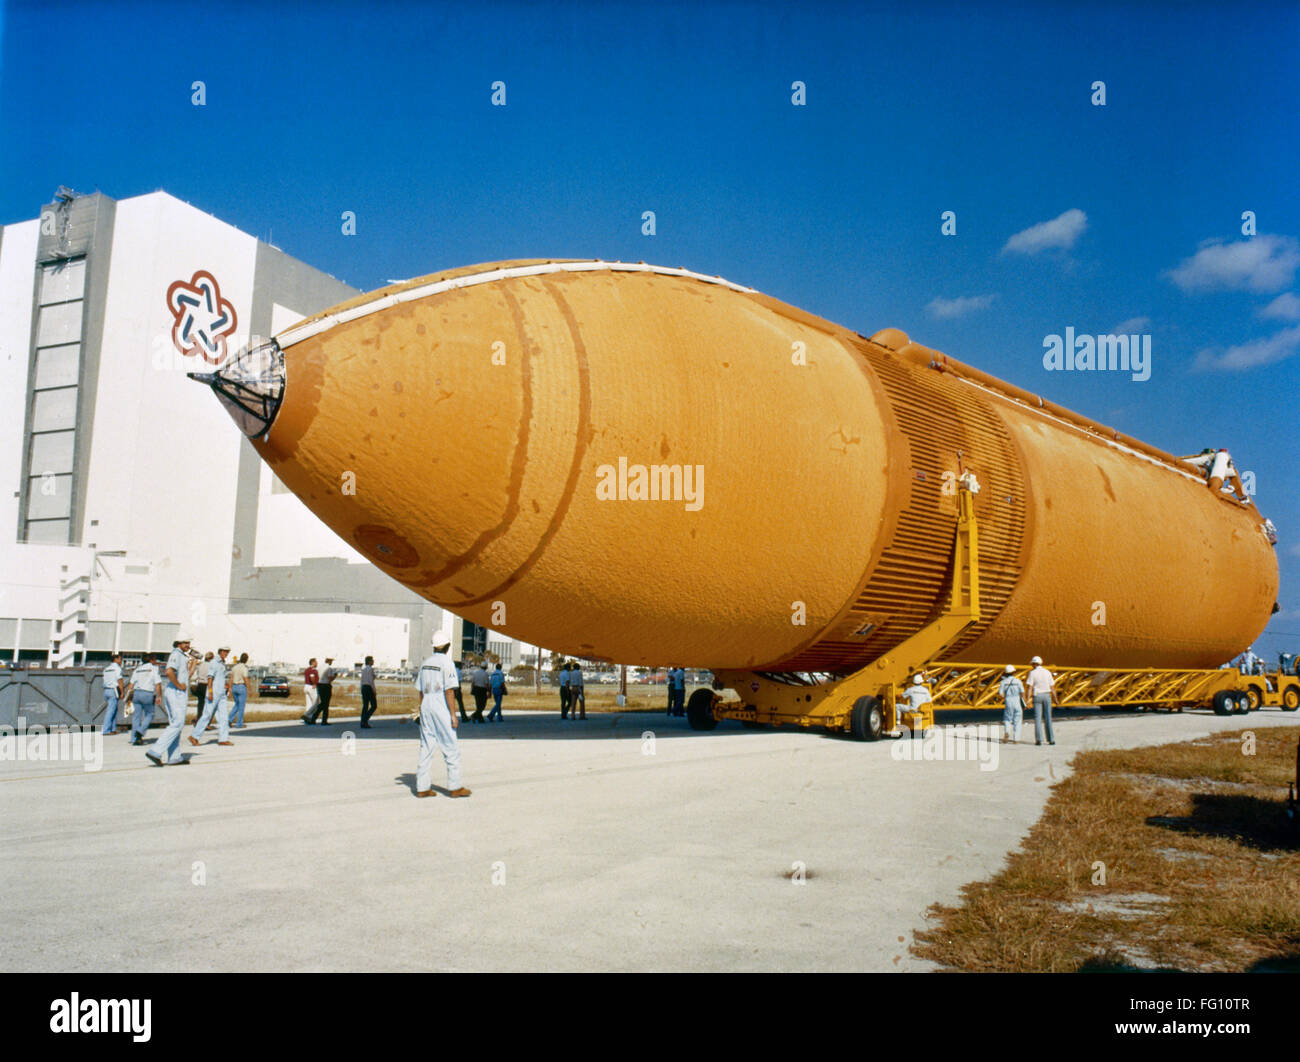 SPACE SHUTTLE: KRAFTSTOFFTANK. NUM Space Shuttle external Fuel Tanks Ankunft am Kennedy Space Center in Florida. Fotografie, c1998. Stockfoto